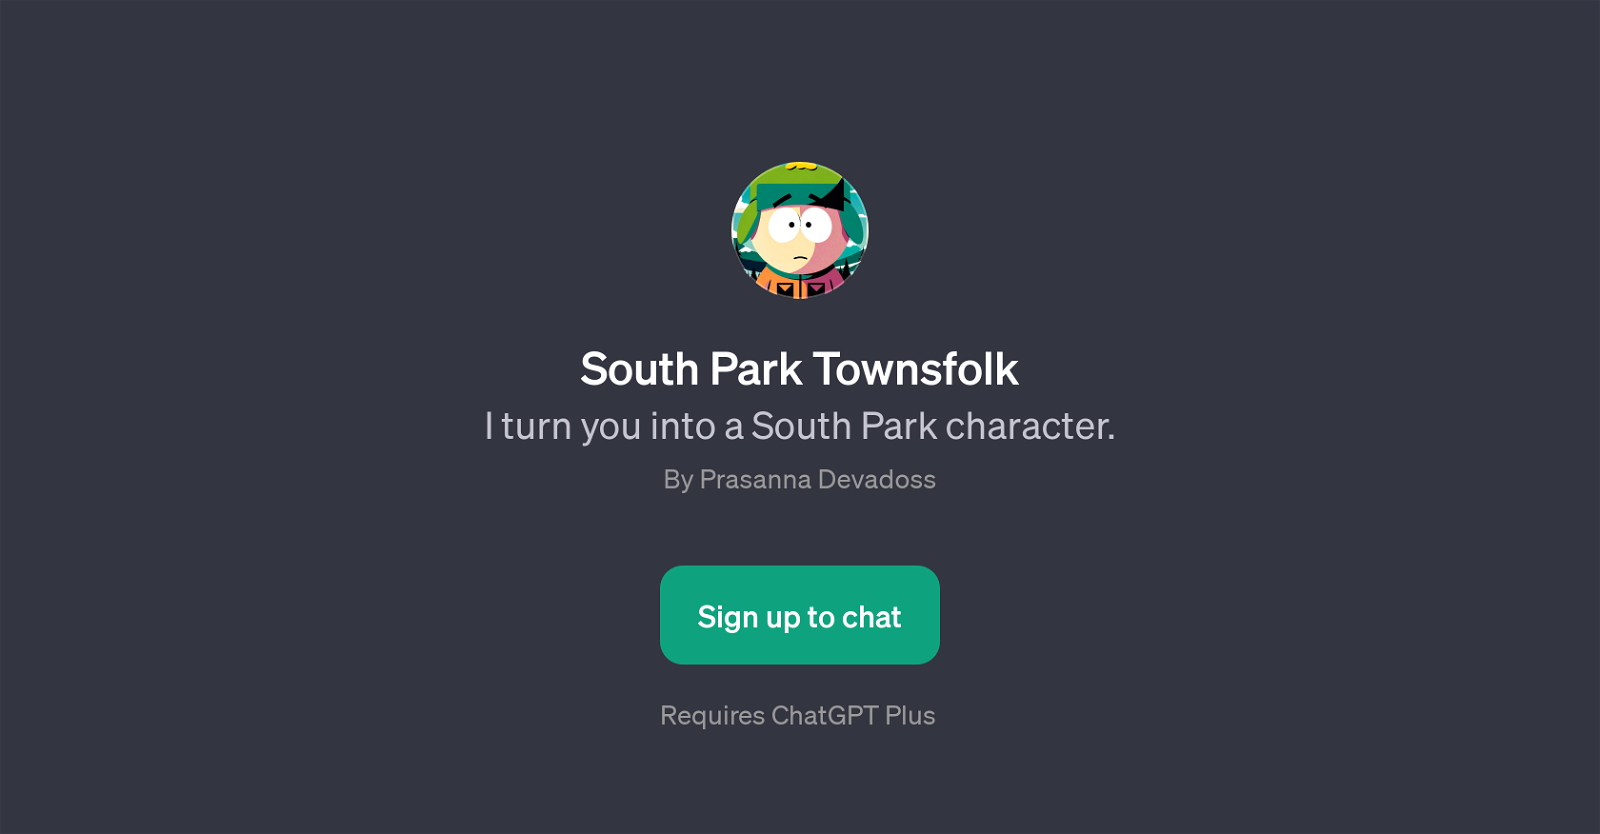 South Park Townsfolk website